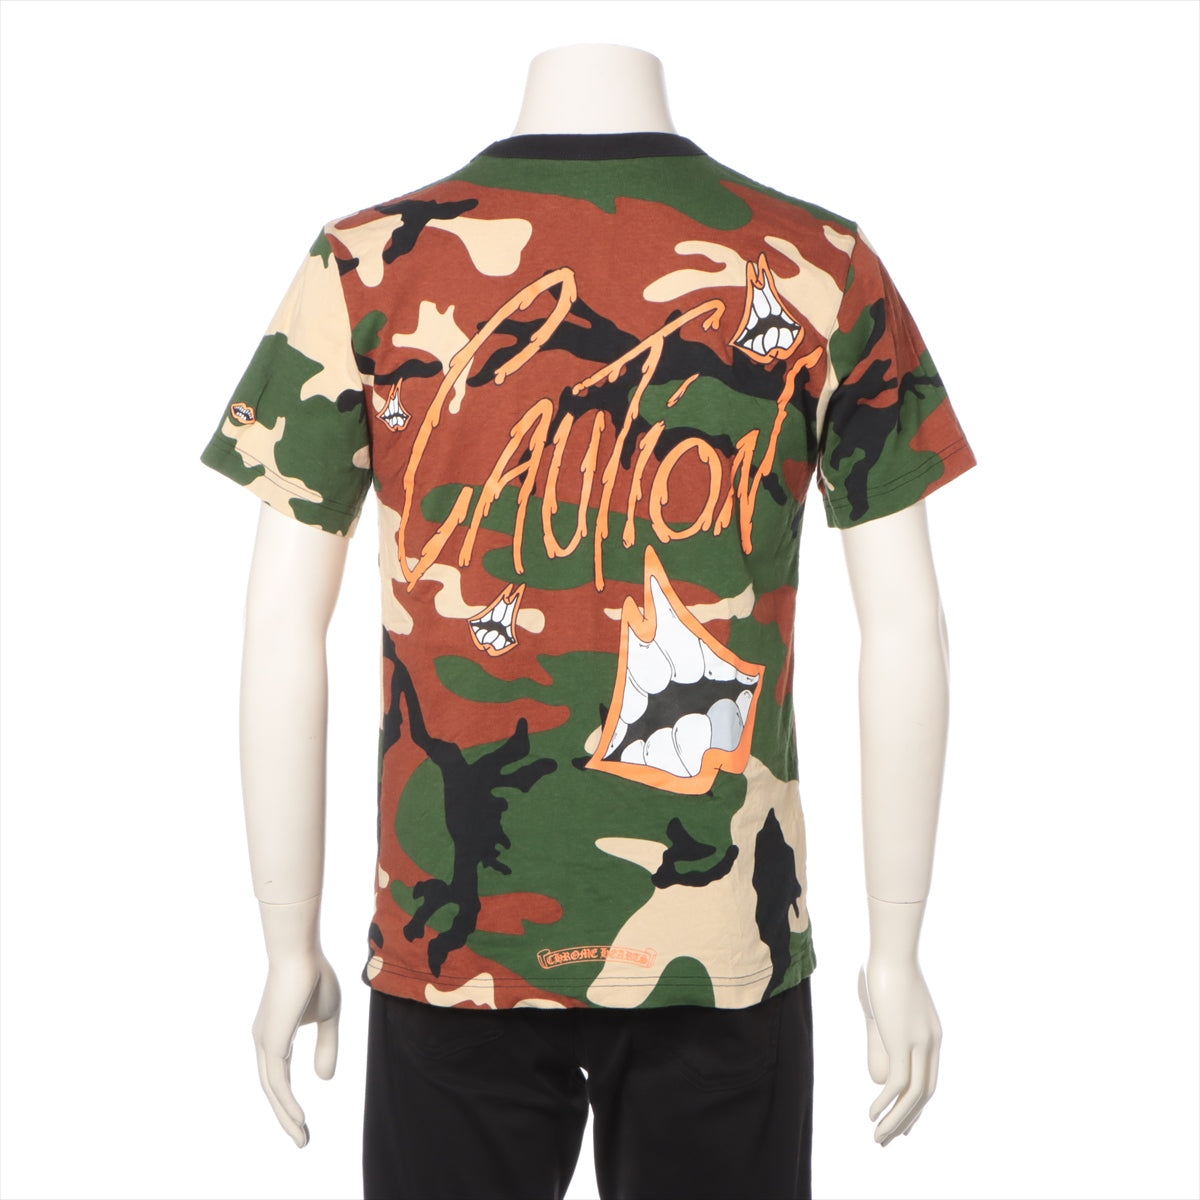 Chrome Hearts Matty Boy T-shirt Cotton size M Camouflage PPO CAUTION